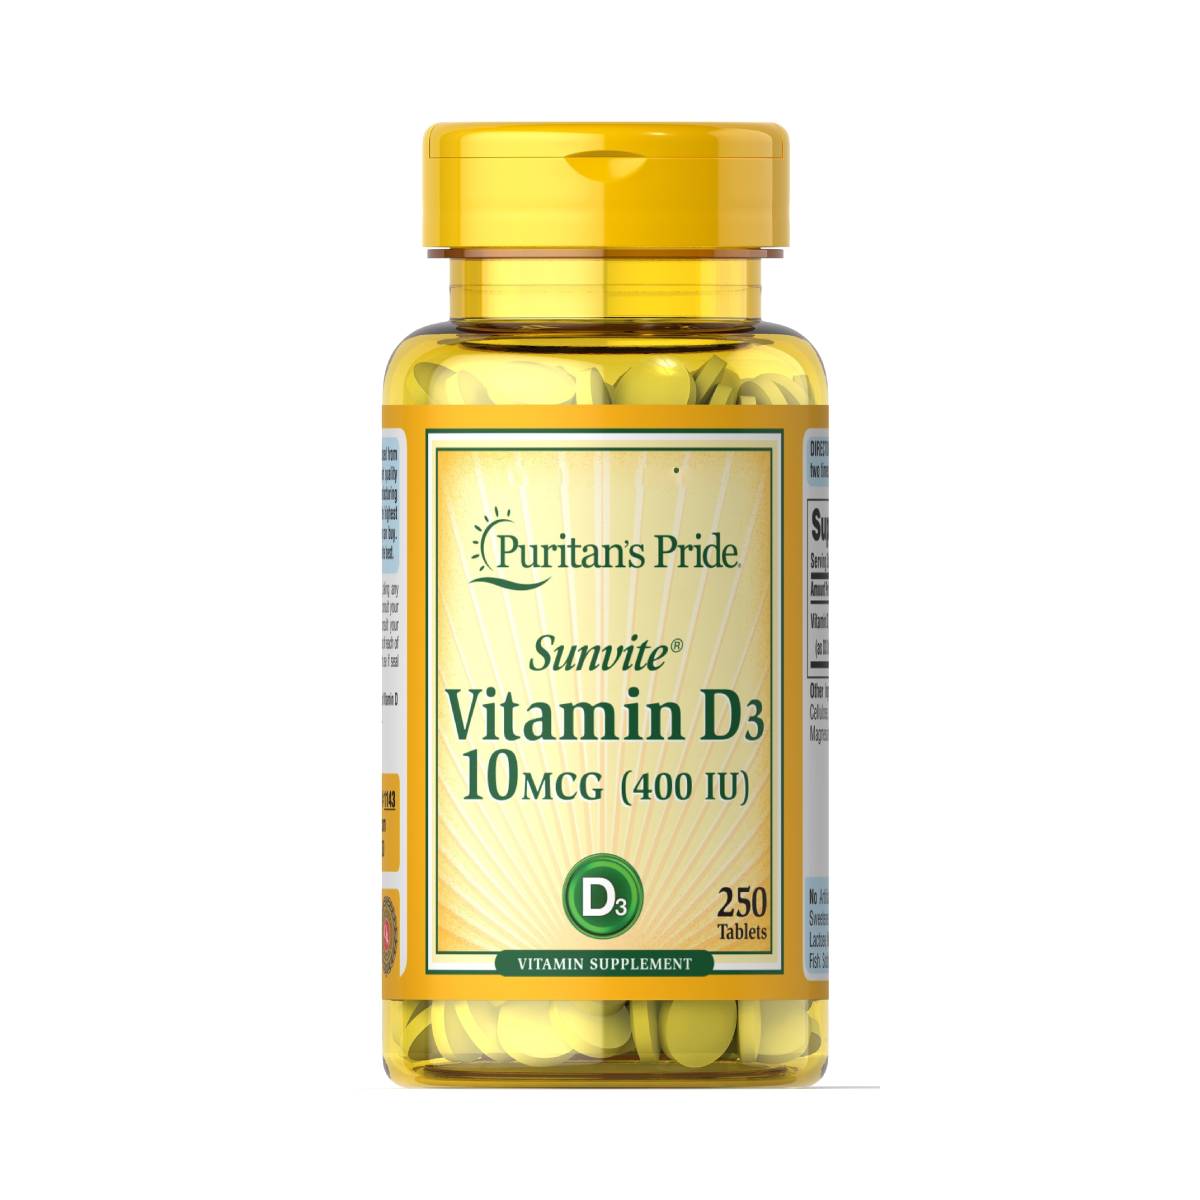 Puritan's Pride, Vitamin D3 10 mcg (400 IU)